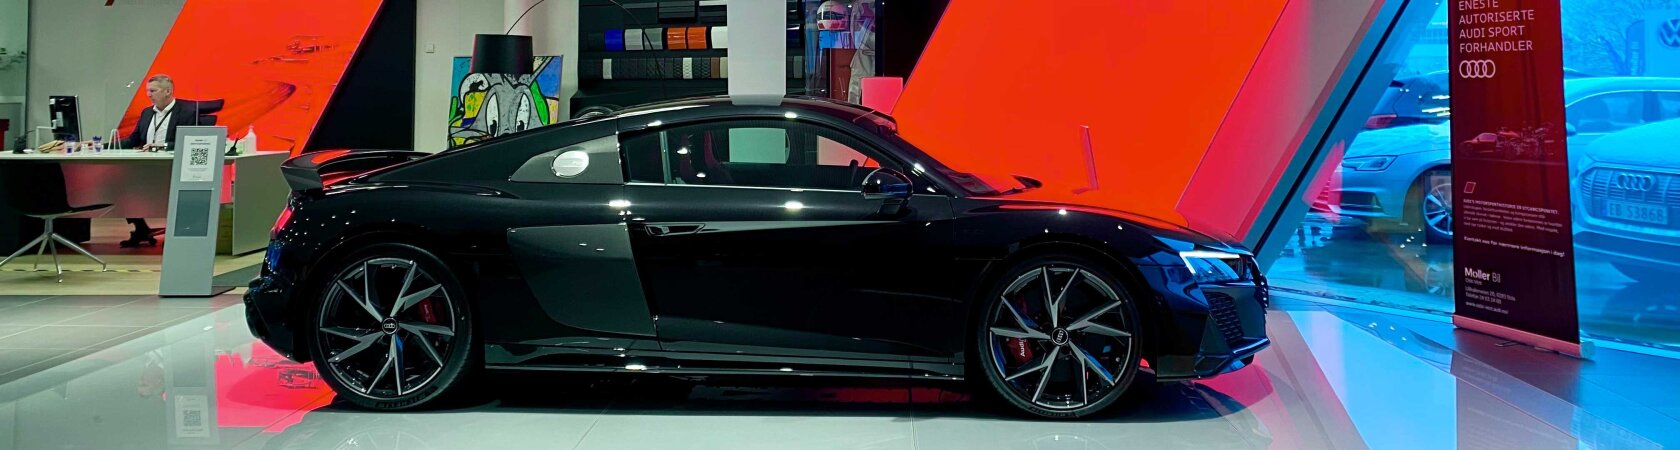 Rød Audi R8 i utstilling